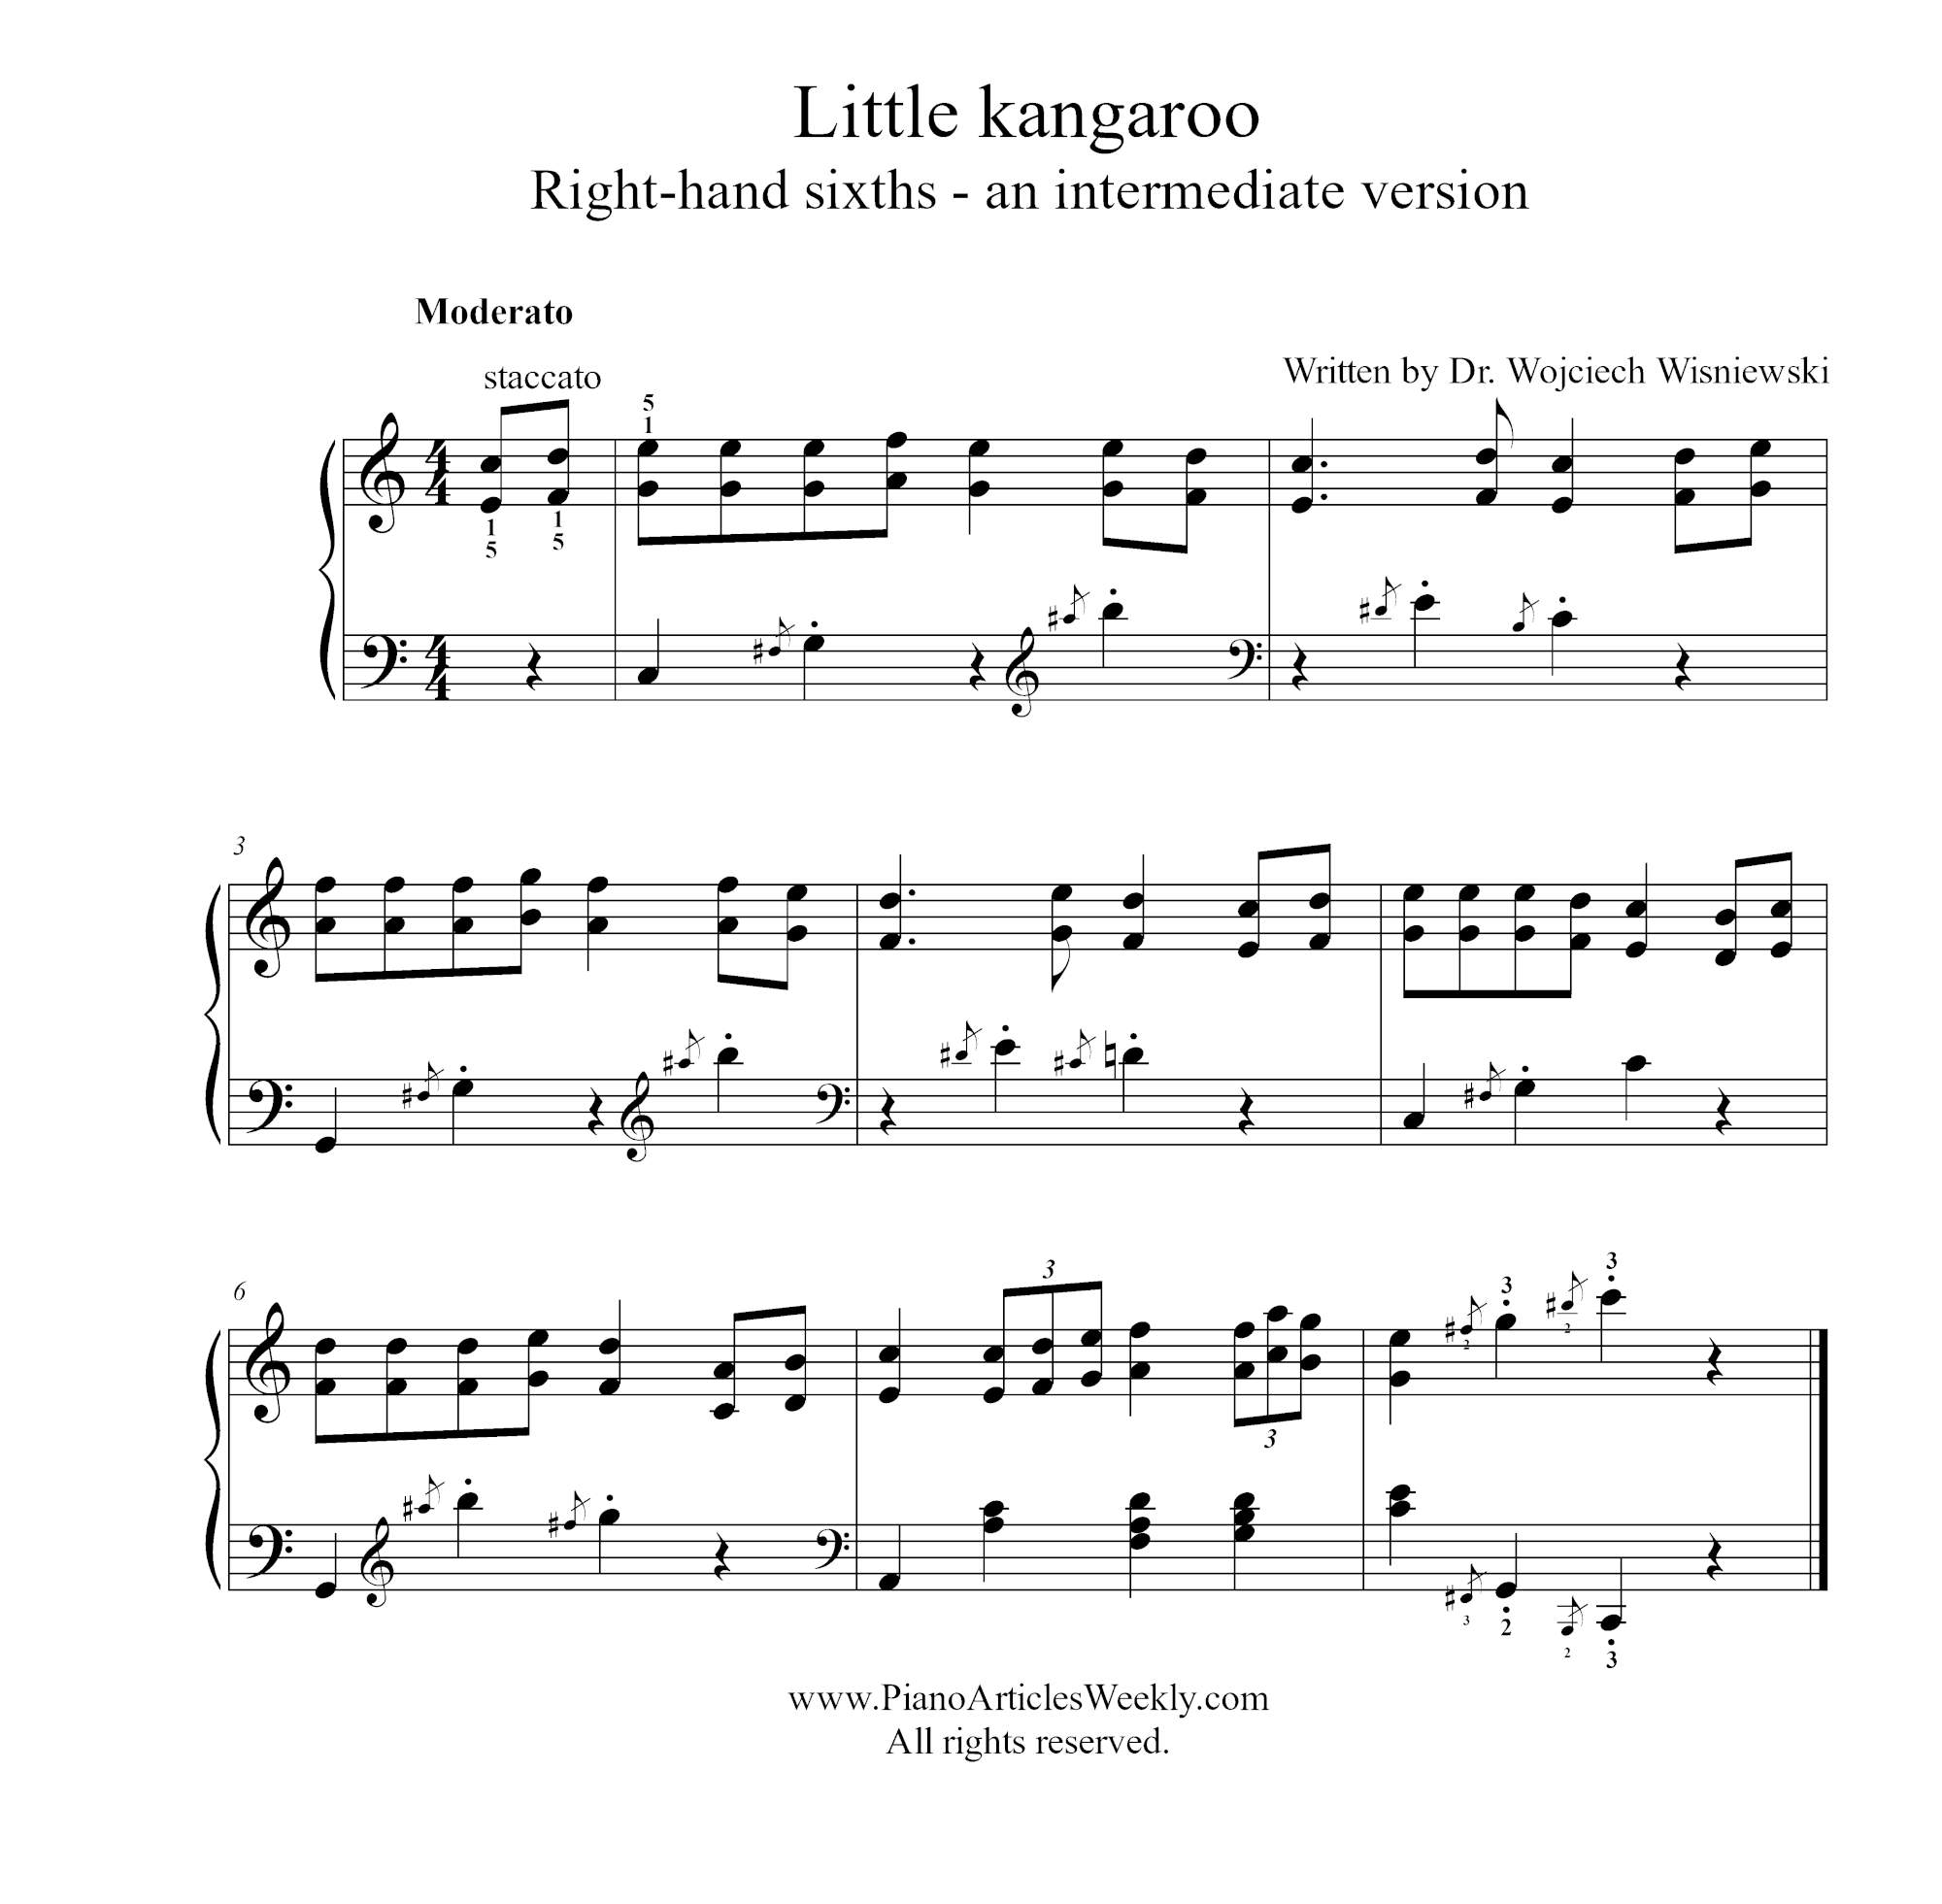 Little kangaroo - right hand sixths intermediat octaves for small hands